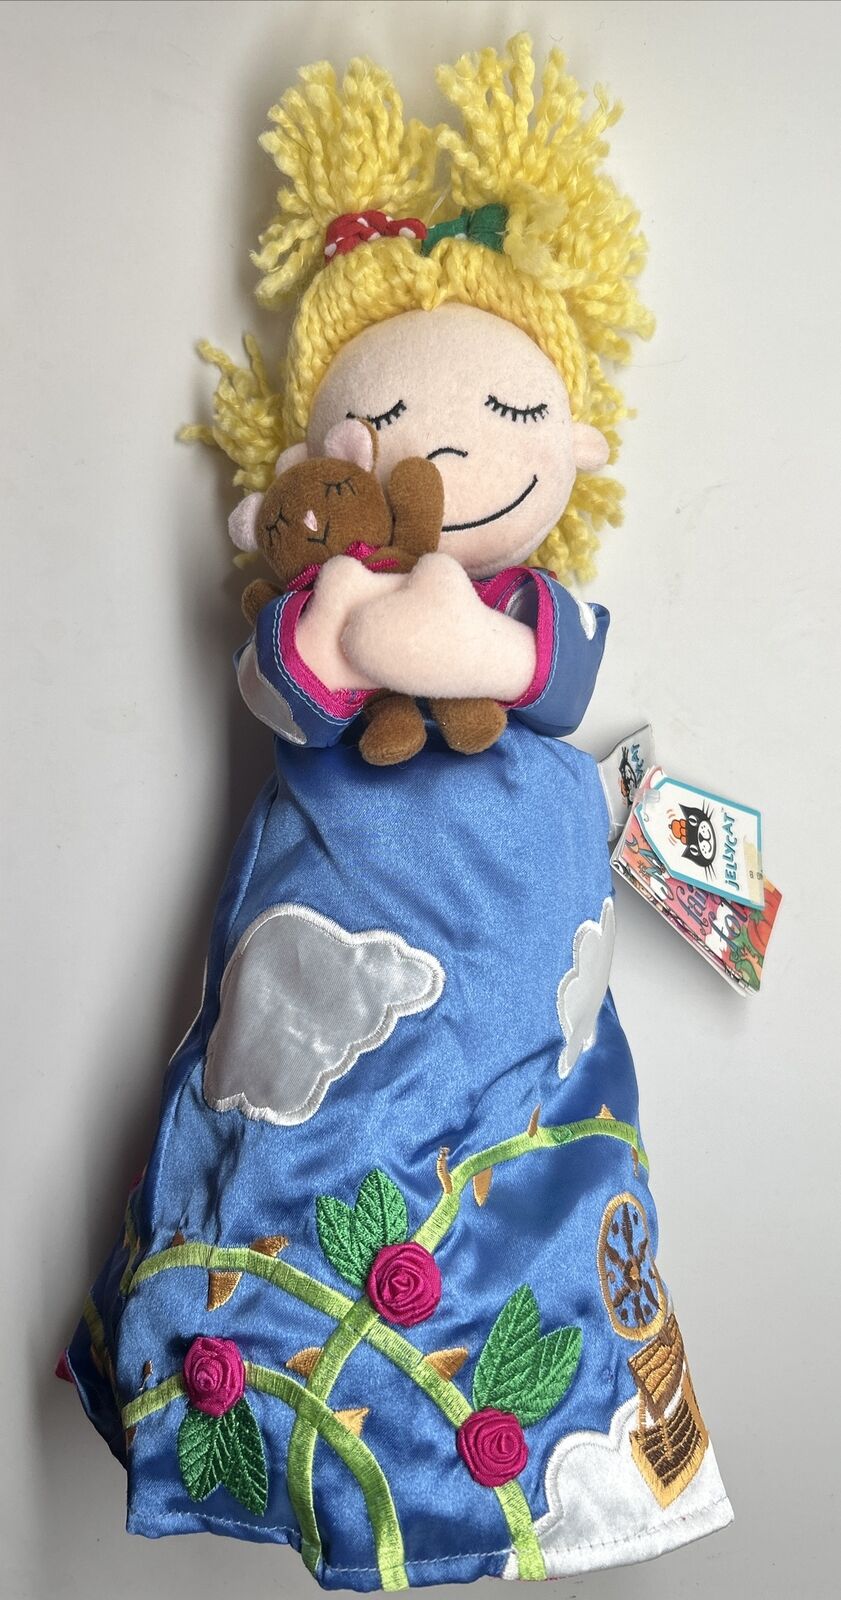 Jellycat Topsy Turvy Fairytale Plush Sleeping Beauty Reversible Doll 8.5” New